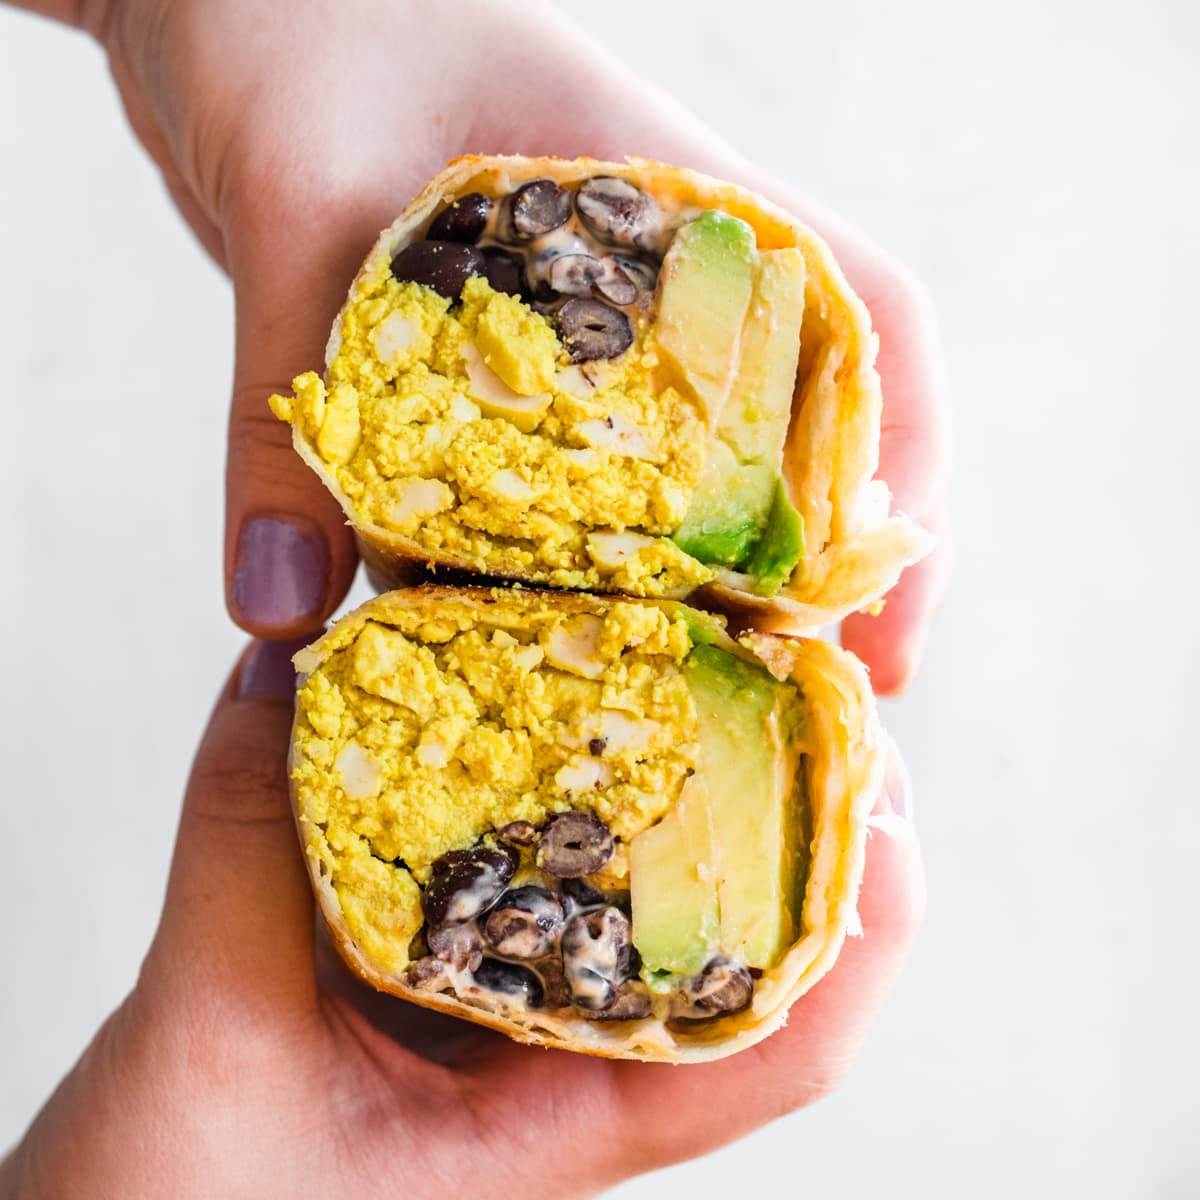 https://www.crowdedkitchen.com/wp-content/uploads/2020/03/Hodo-Breakfast-Burritos-10.jpg